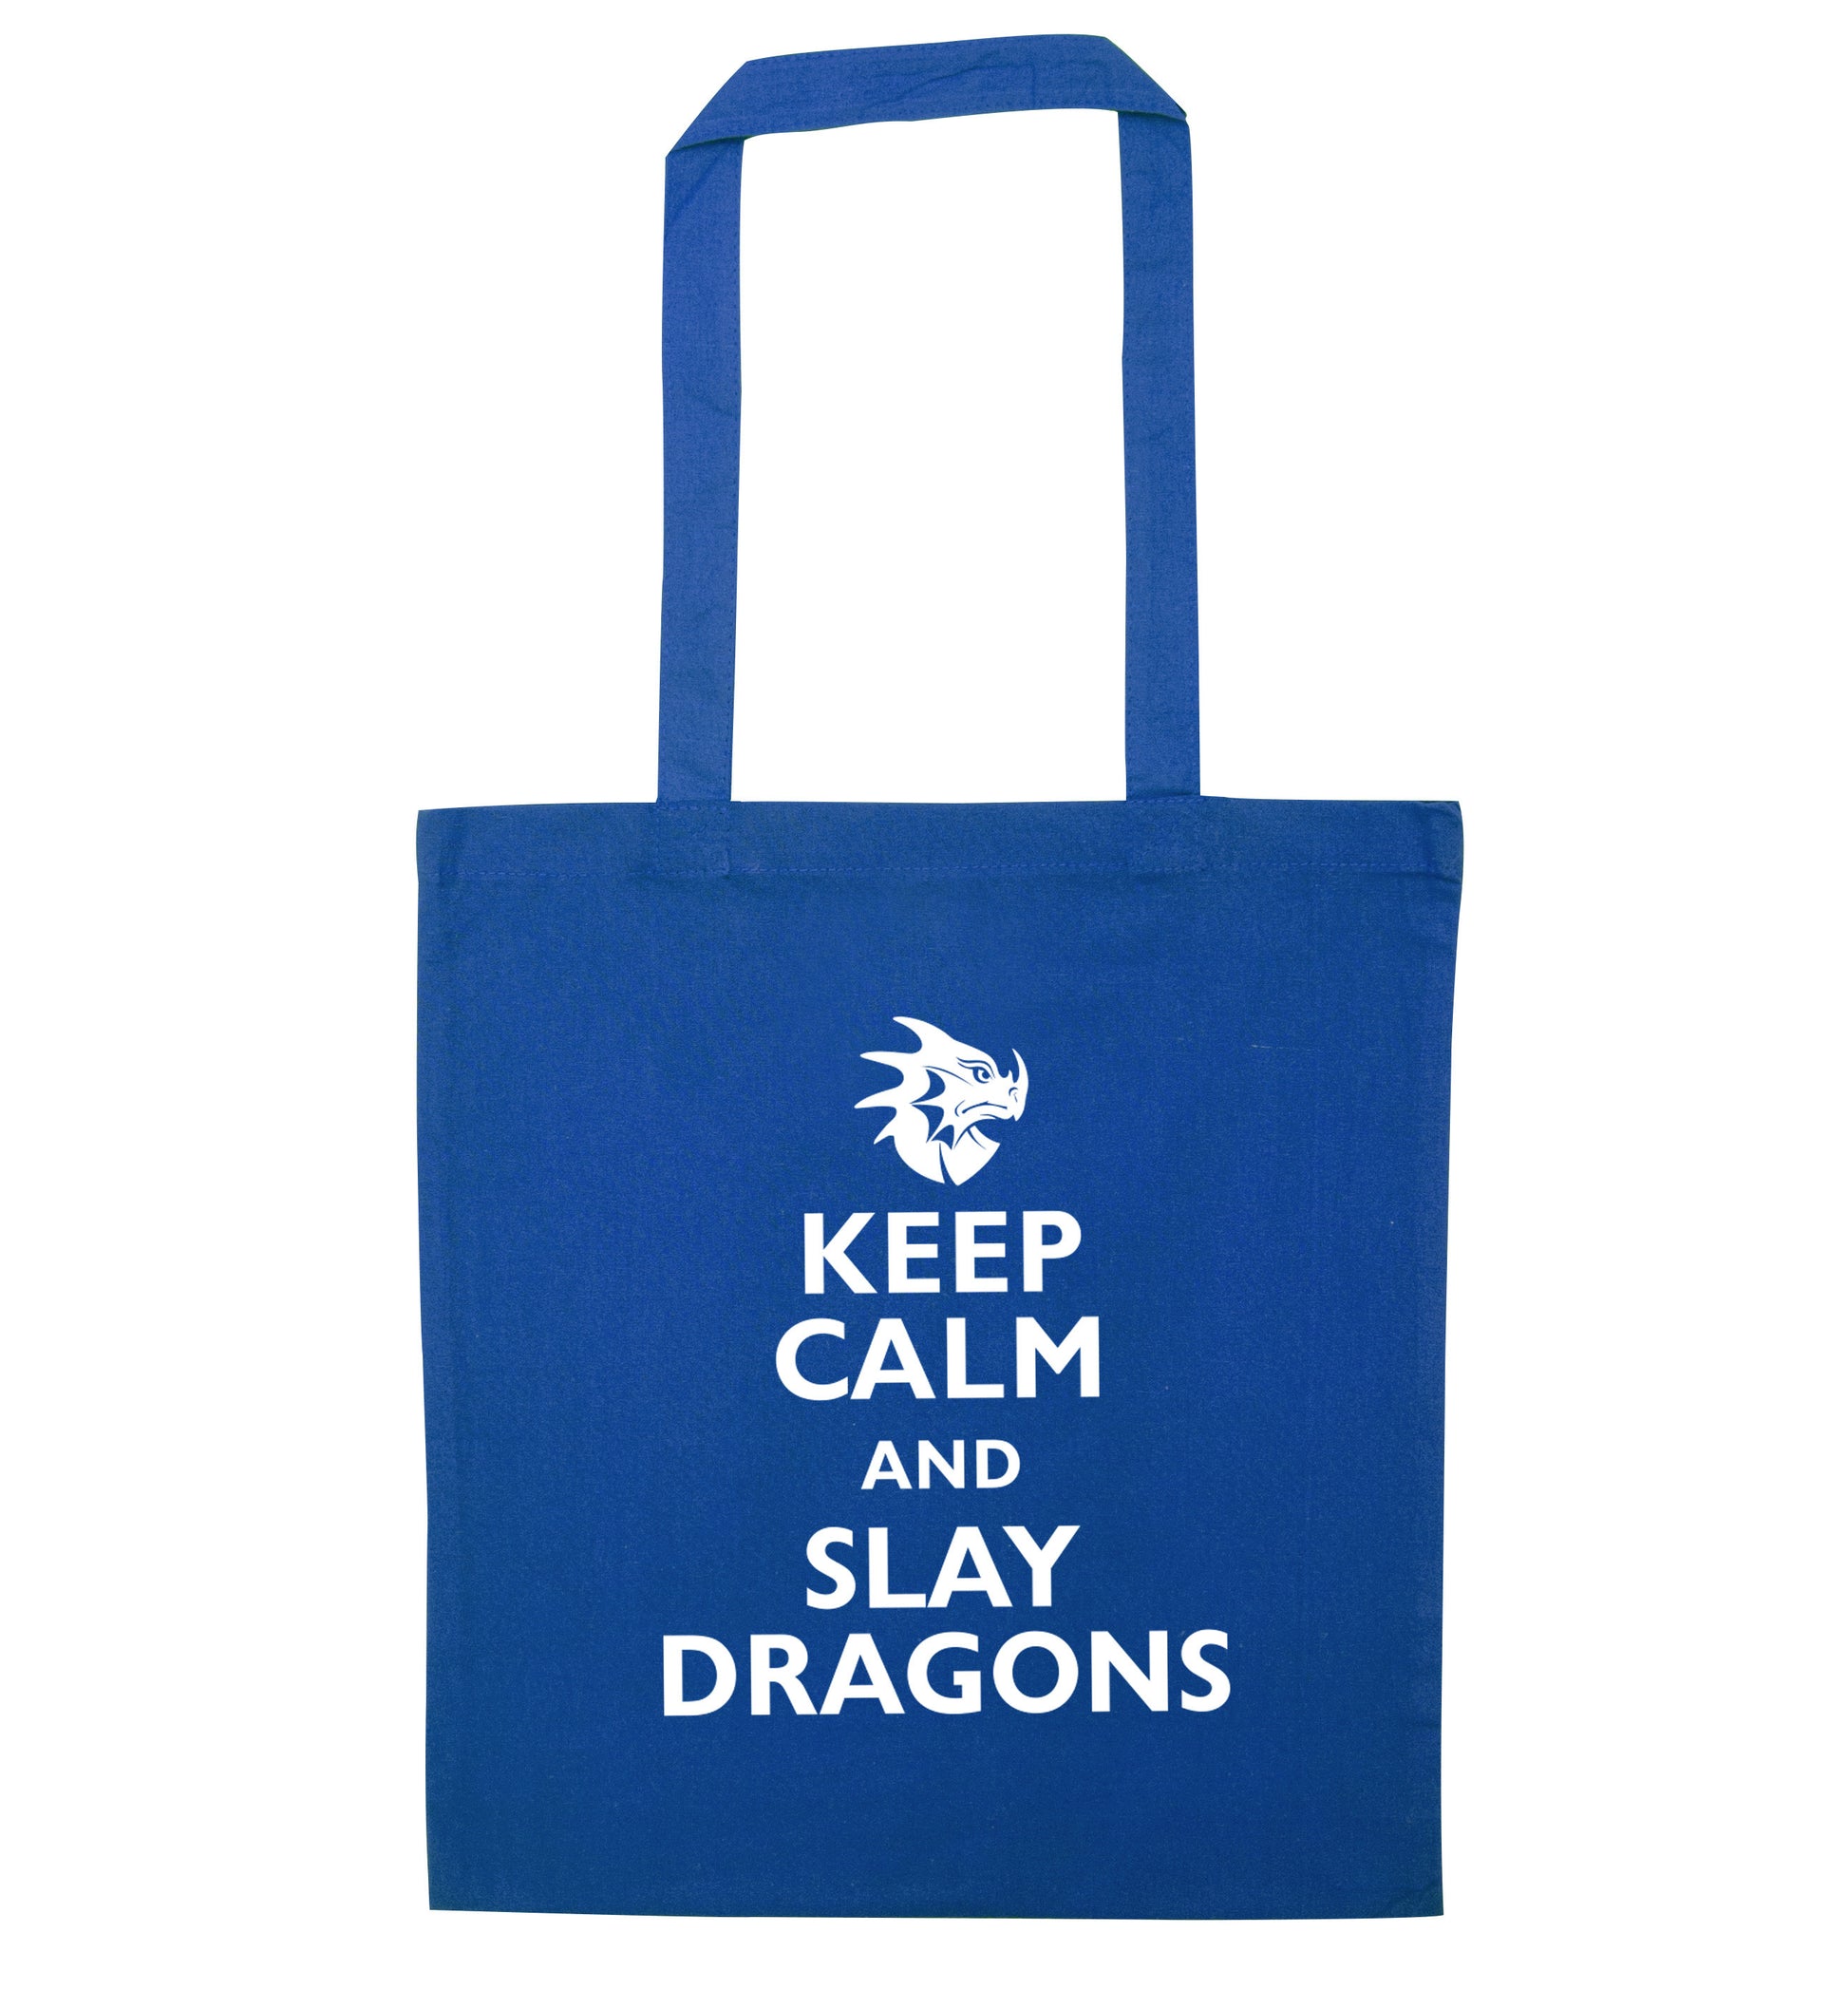 Keep calm and slay dragons blue tote bag